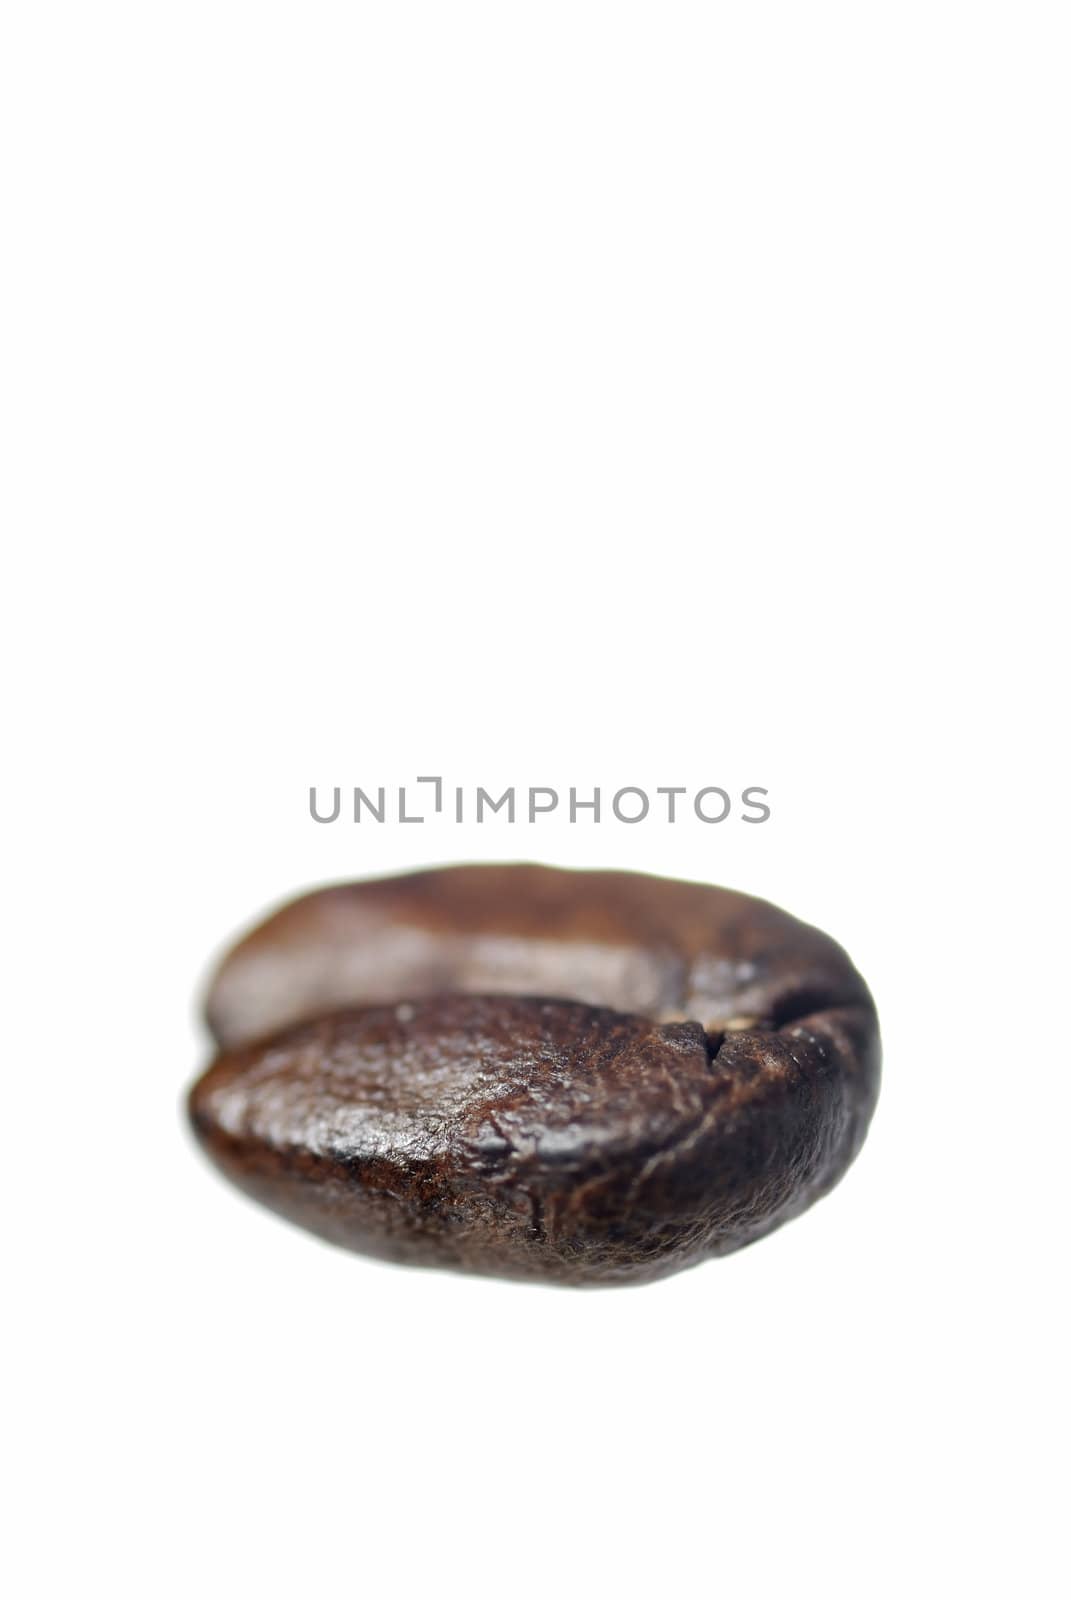 Studio Macro Shot of One Arabica Coffee Bean.